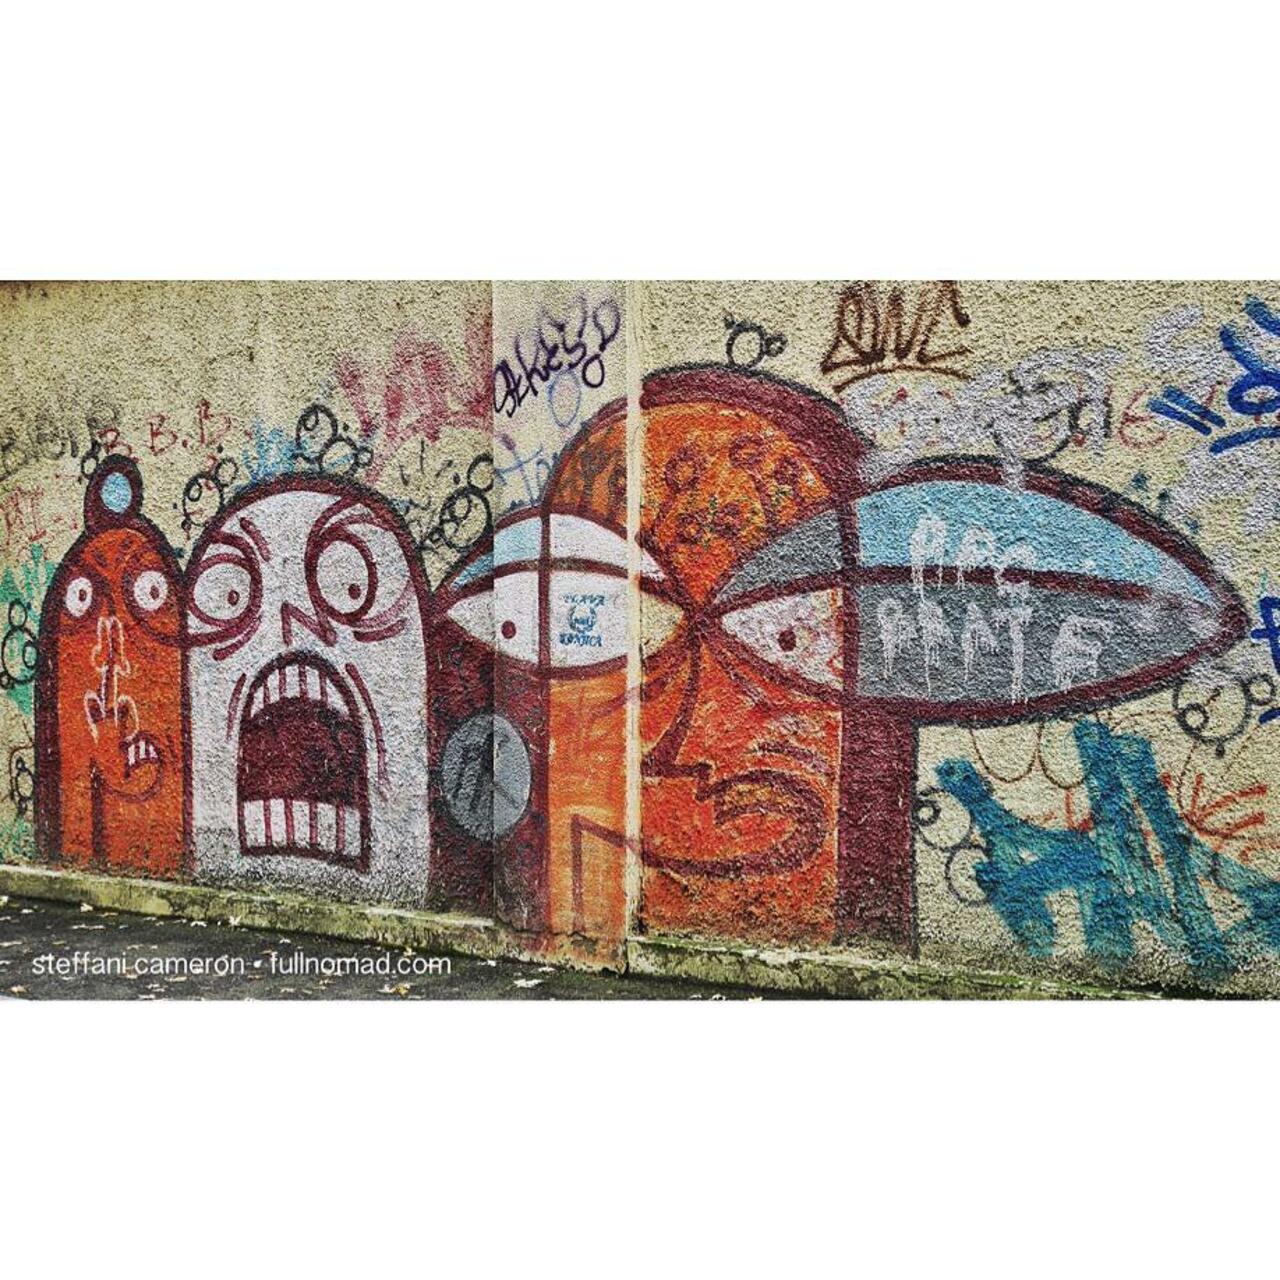 Street art in #Zagreb. I love this. 
#Croatia #graffiti #streetart #livingthedream #travel… http://ift.tt/1Ows2gd http://t.co/reKnaYzURL